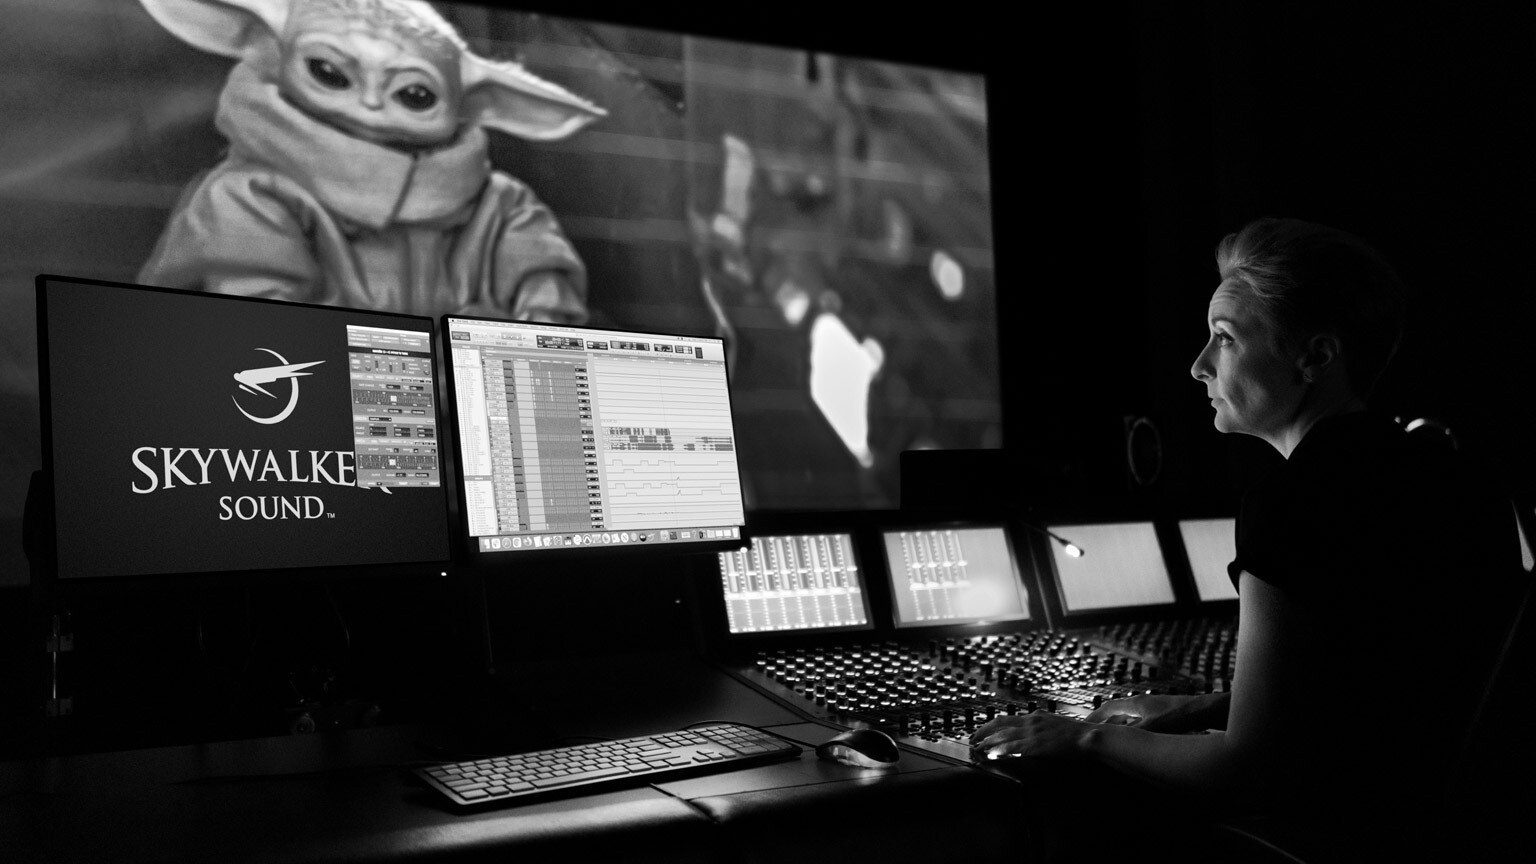 Sound designer at Skywalker Sound at work with Grogu on screen.